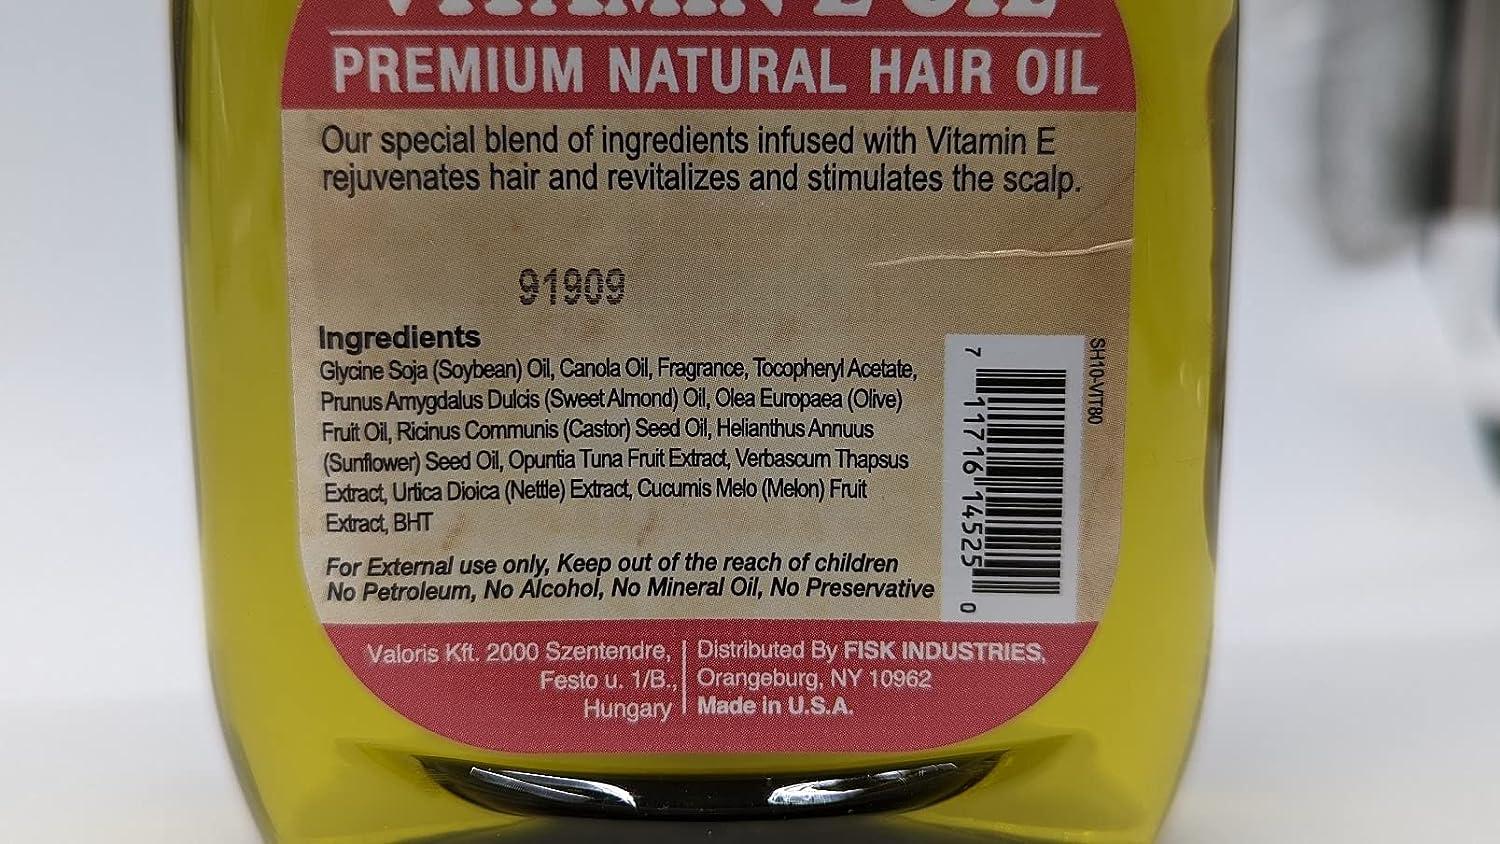 Difeel Premium Natural Hair Oil - Tea Tree Oil 7.1 oz.